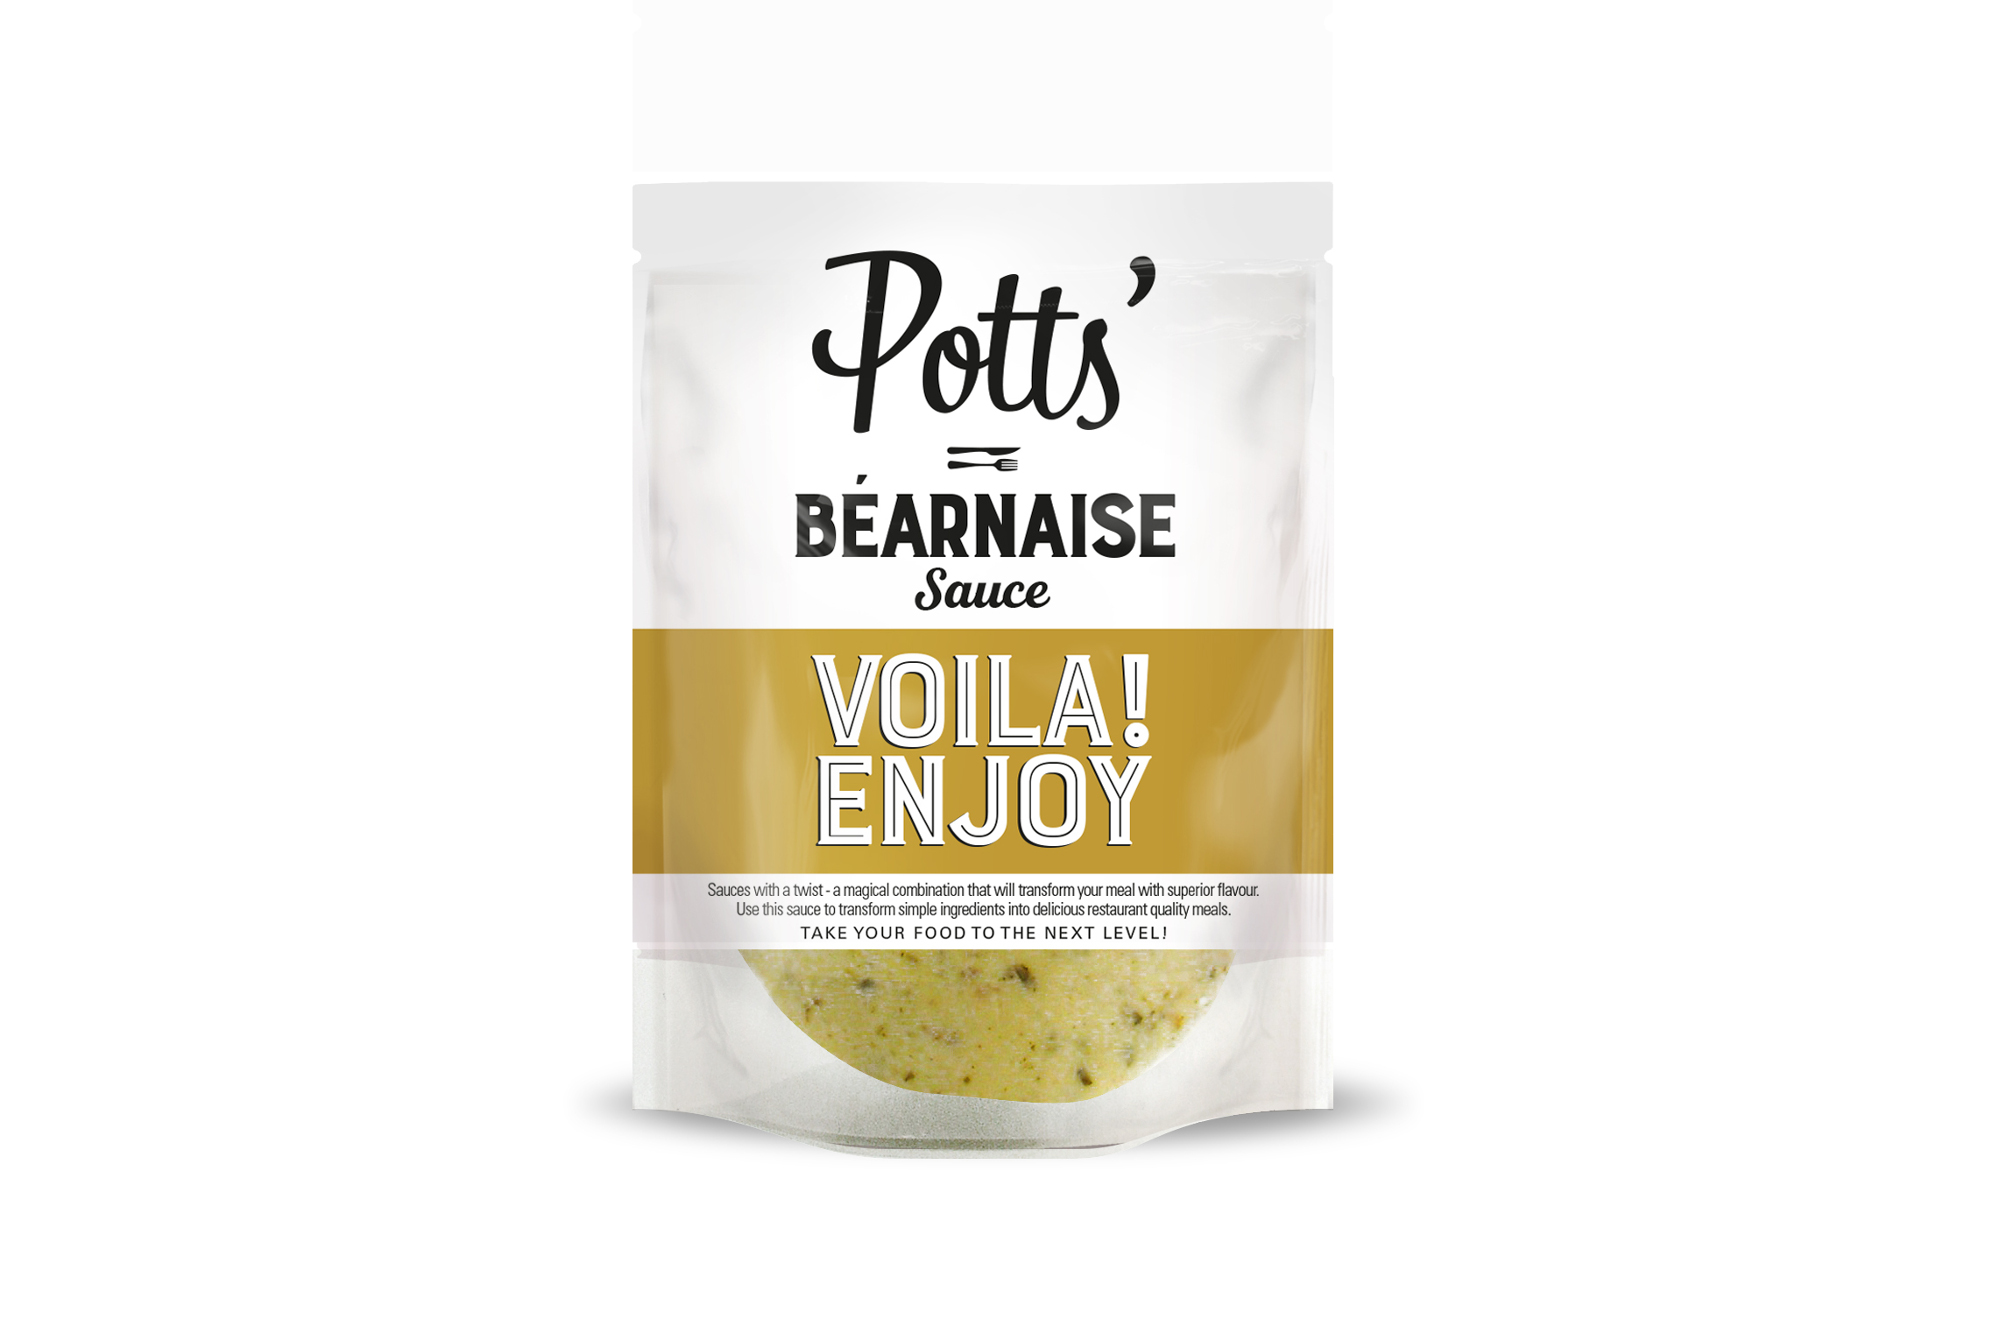 Potts Bearnaise Sauce